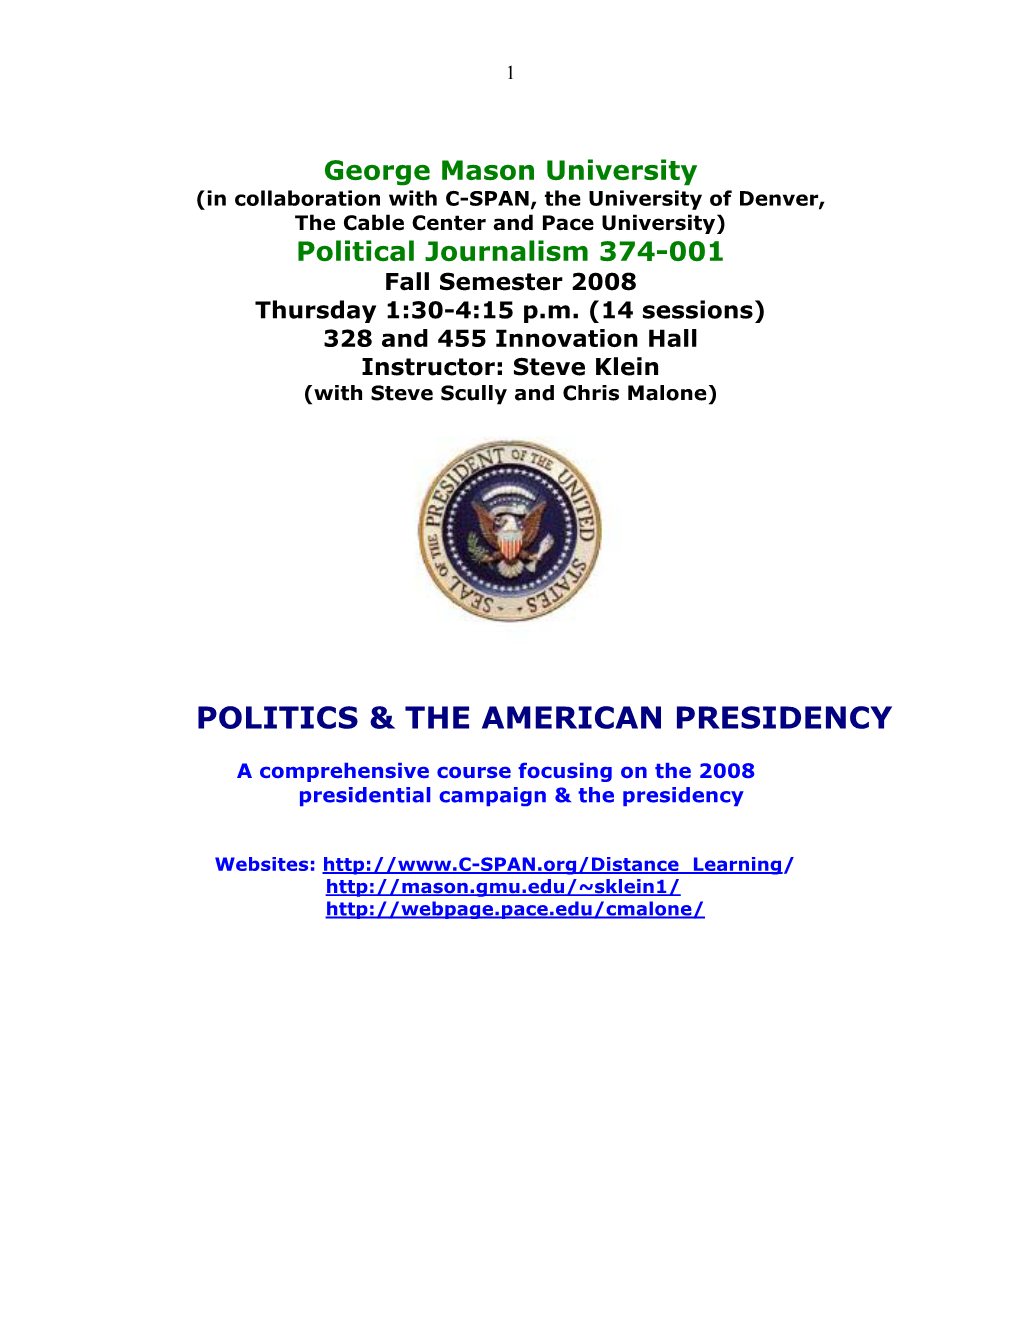 Pace University) Political Journalism 374-001 Fall Semester 2008 Thursday 1:30-4:15 P.M